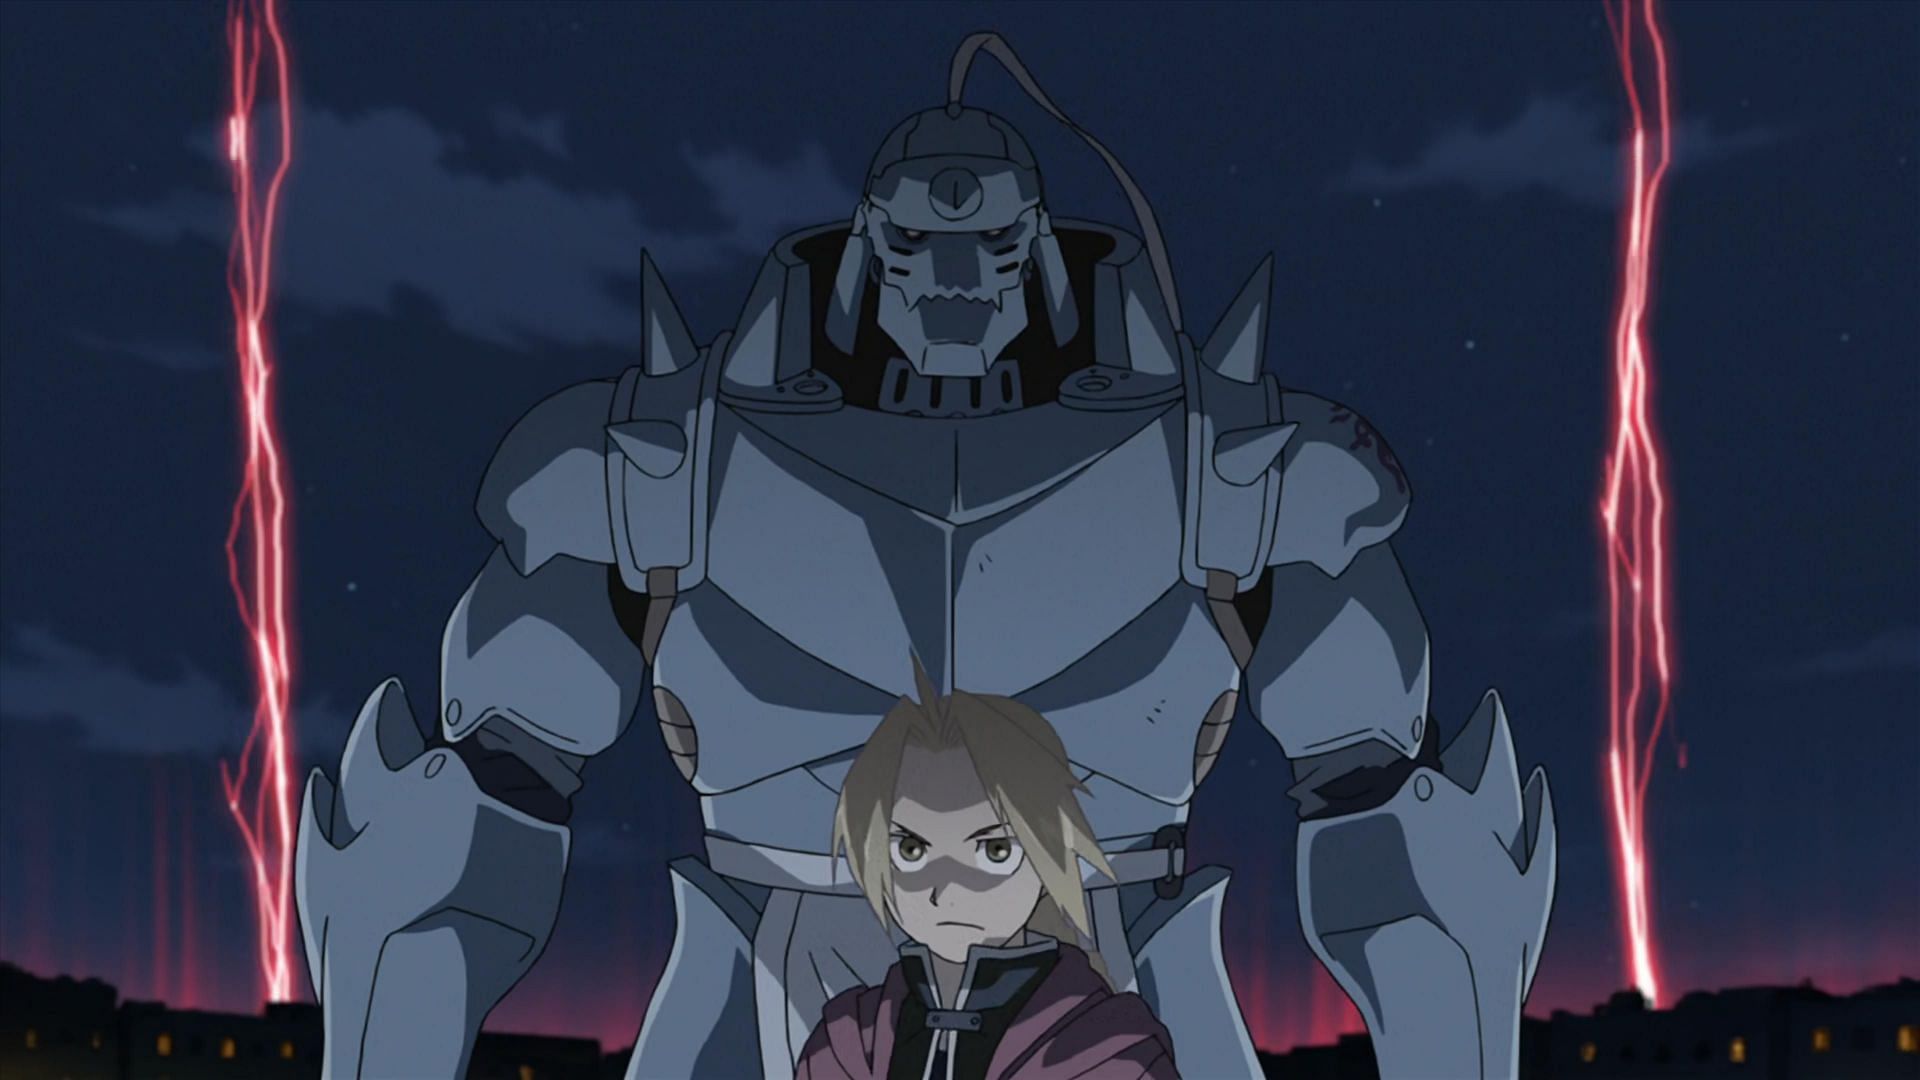 Is Fullmetal Alchemist: Brotherhood a sequel to the original anime